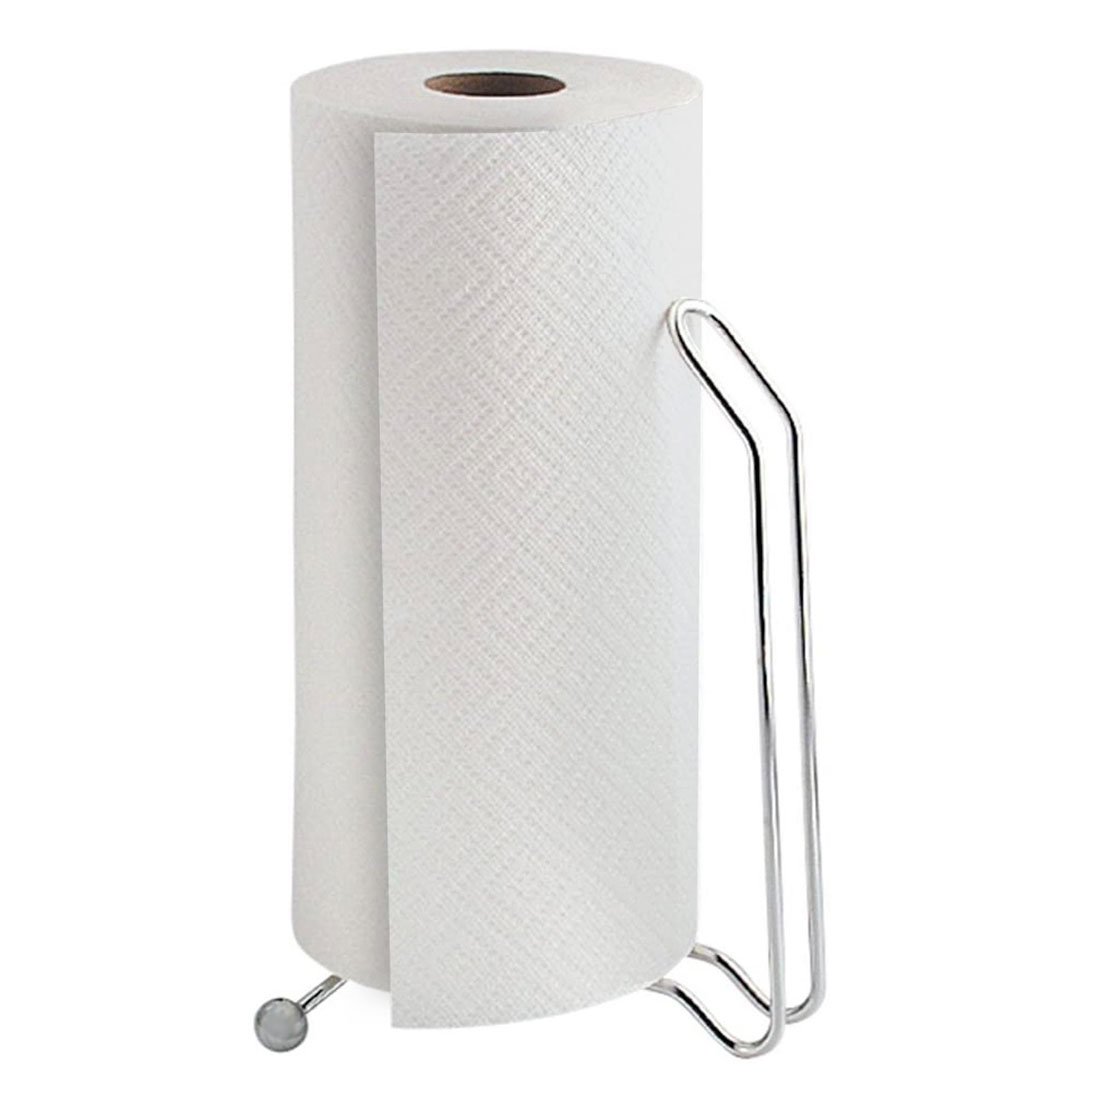 https://www.lodgingkit.com/wp-content/uploads/2019/07/int35402-paper-towel-holder.jpg